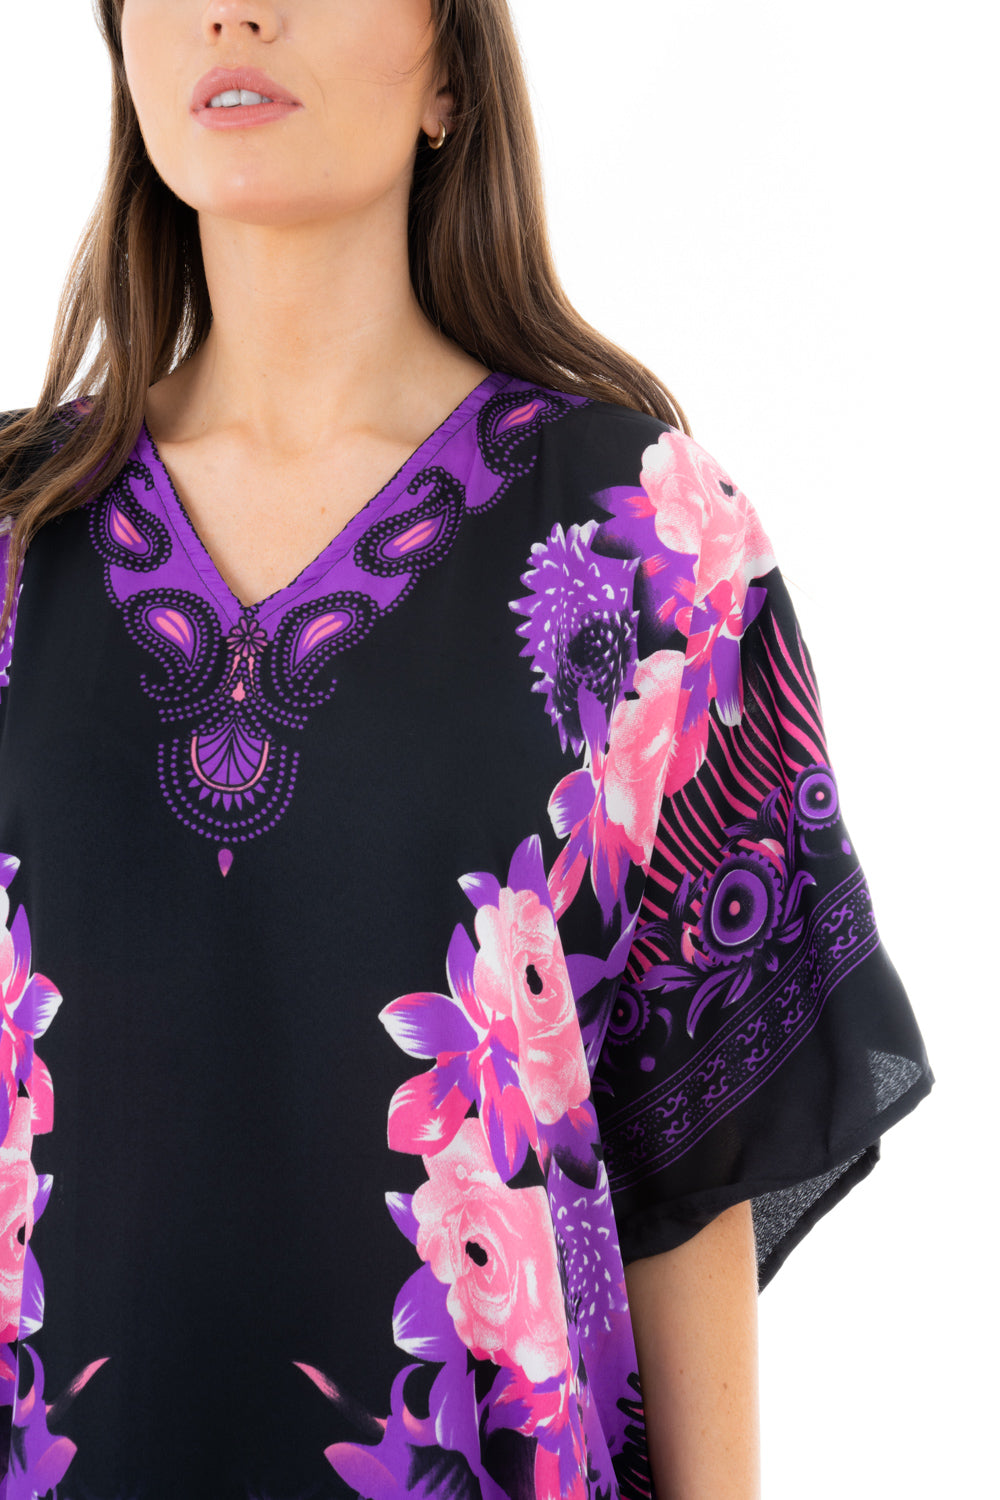 Full Length Long Maxi Kaftan Dress in Floral Purple- Pack of 12